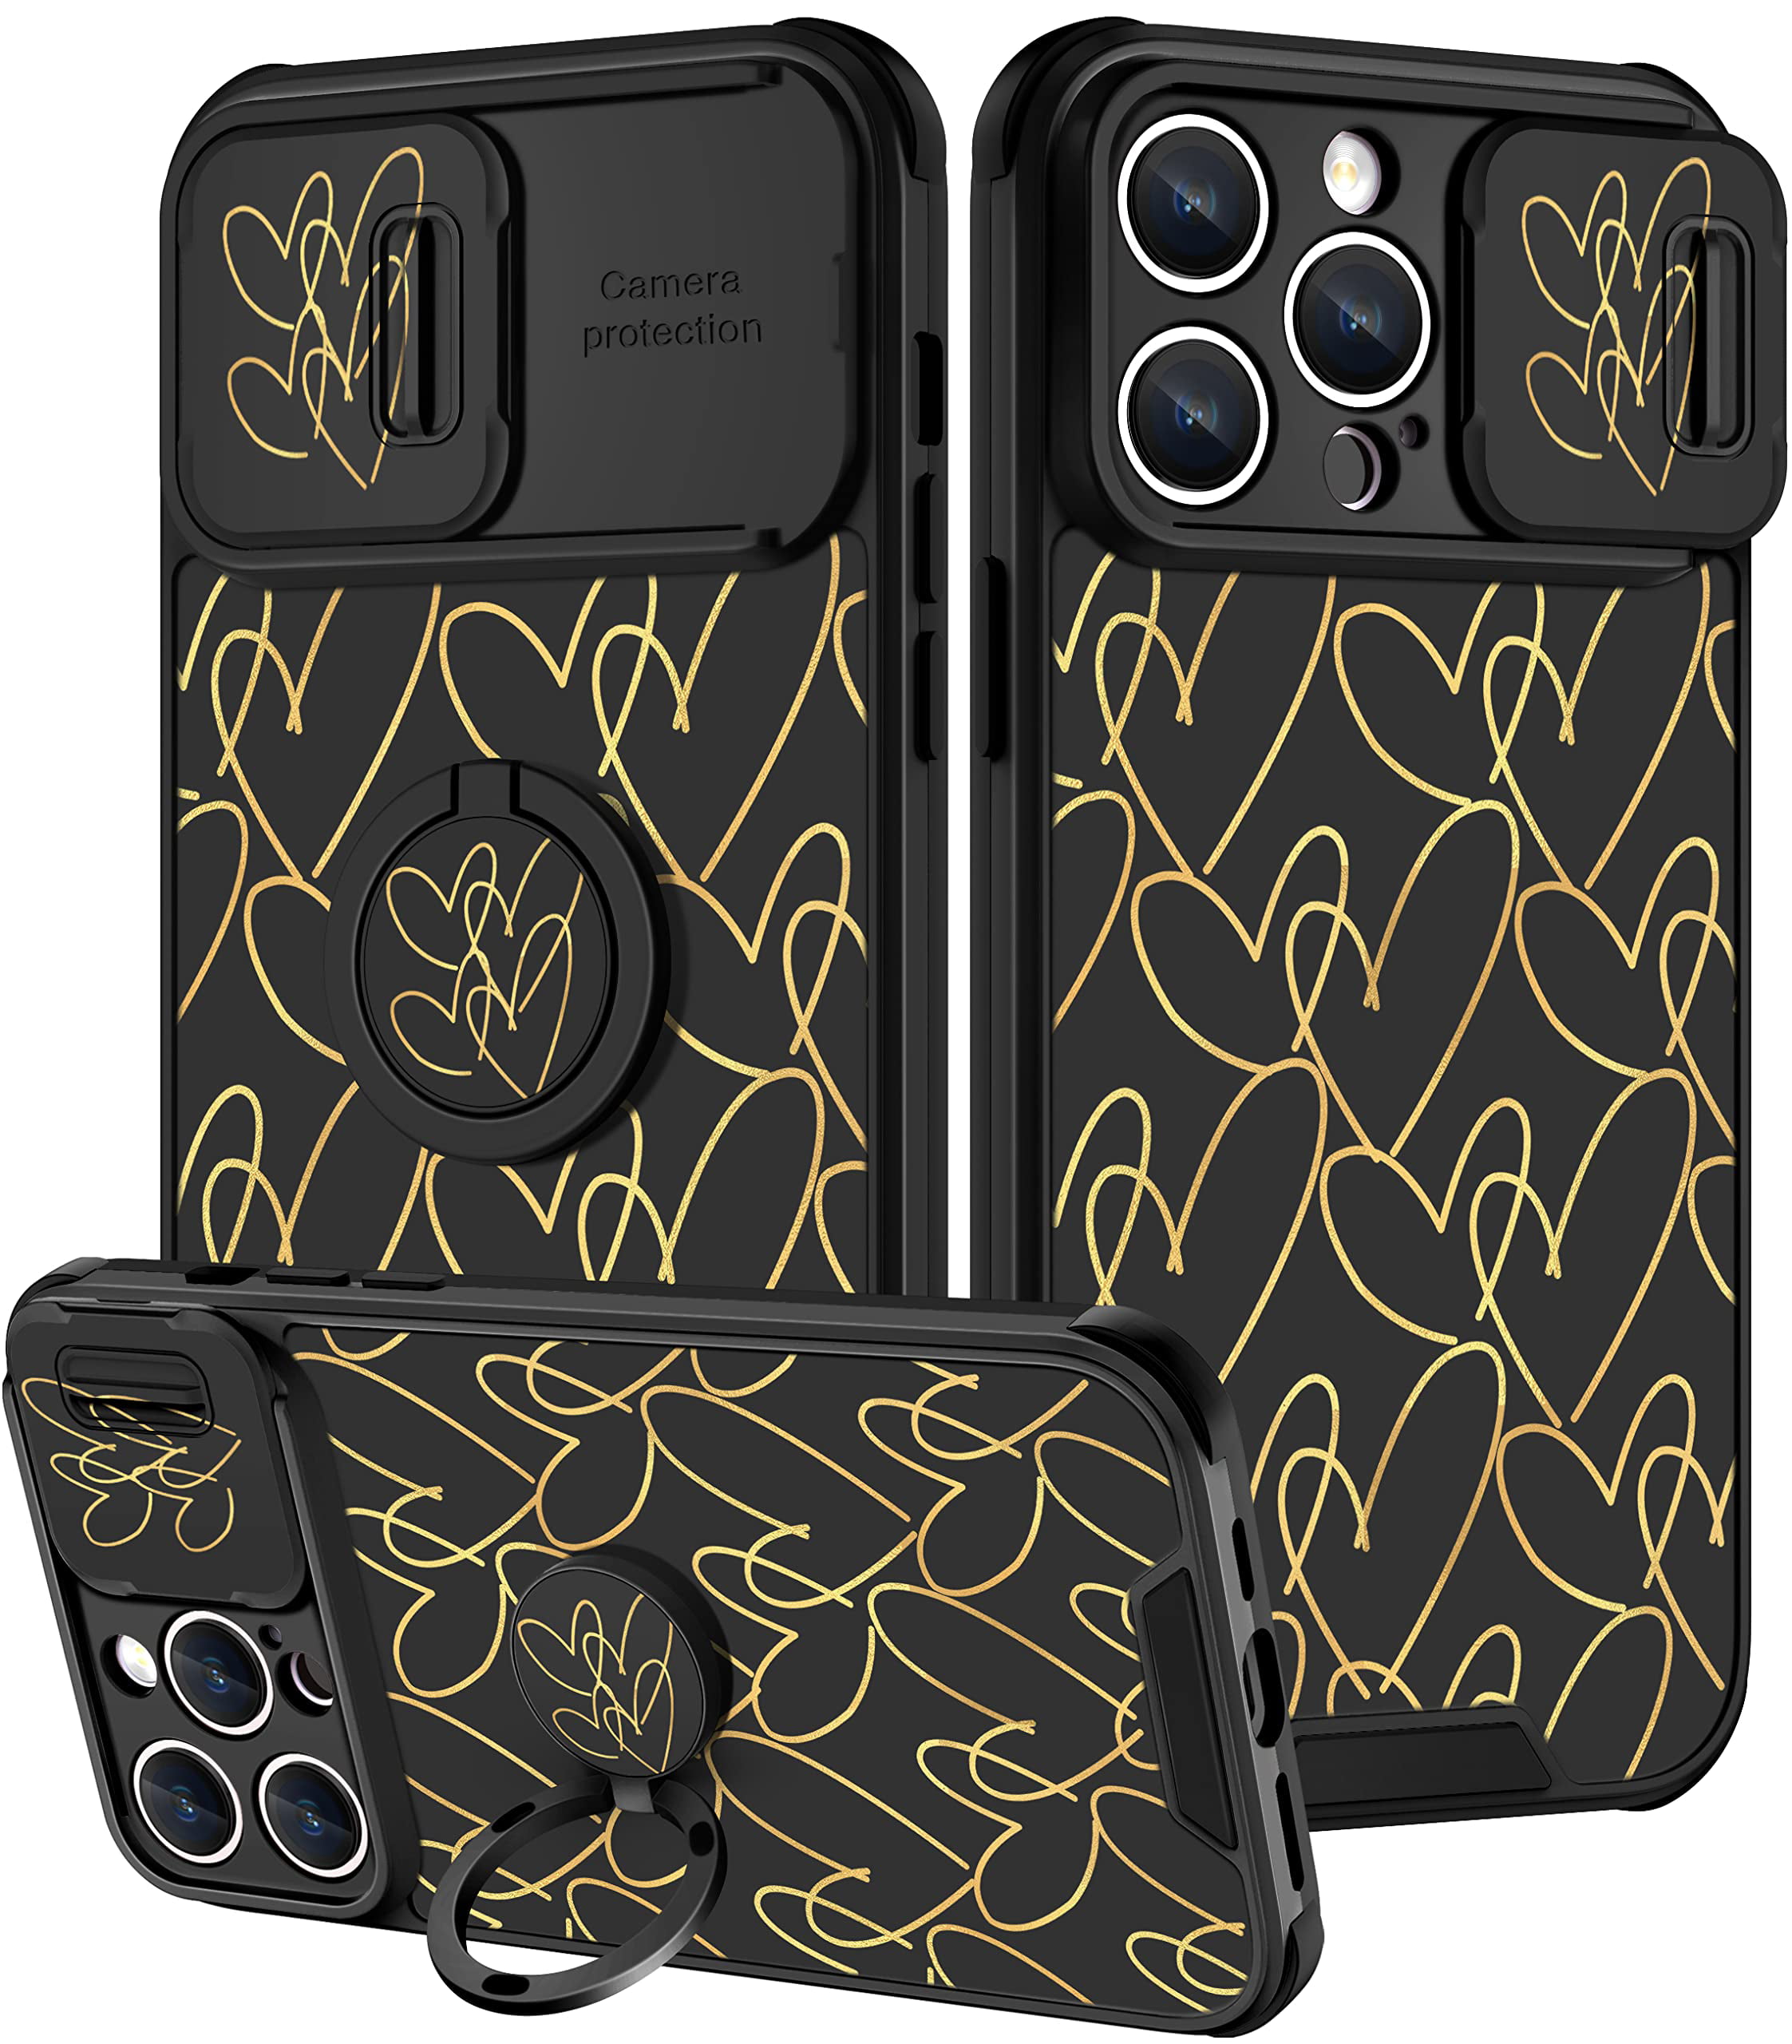 Gray Louis Vuitton Logo iPhone 12 Pro Case